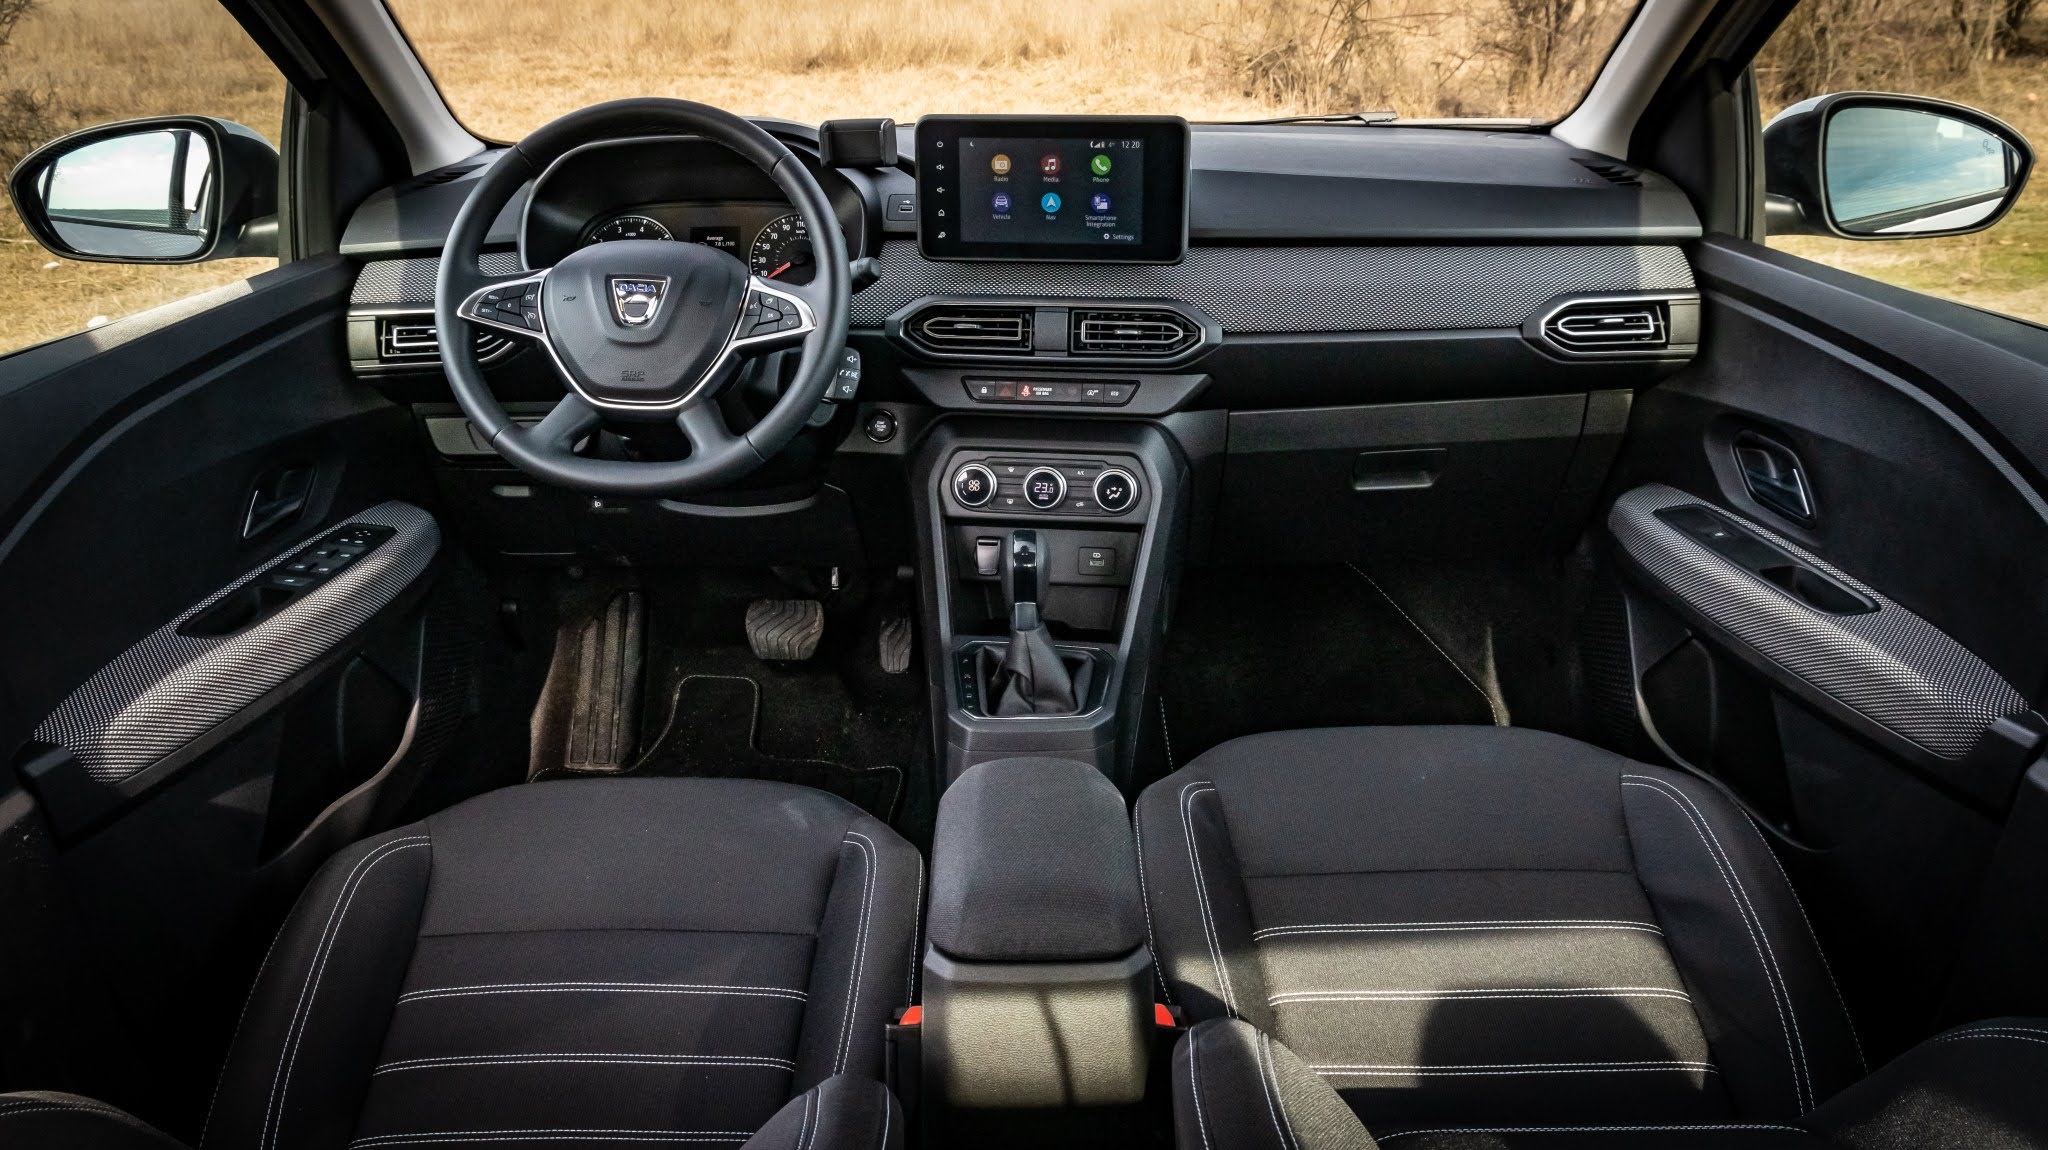 Chip lime Bruise Dacia Logan 2021 Comfort TCe 90 CVT - review : Gadget.ro – Hi-Tech Lifestyle